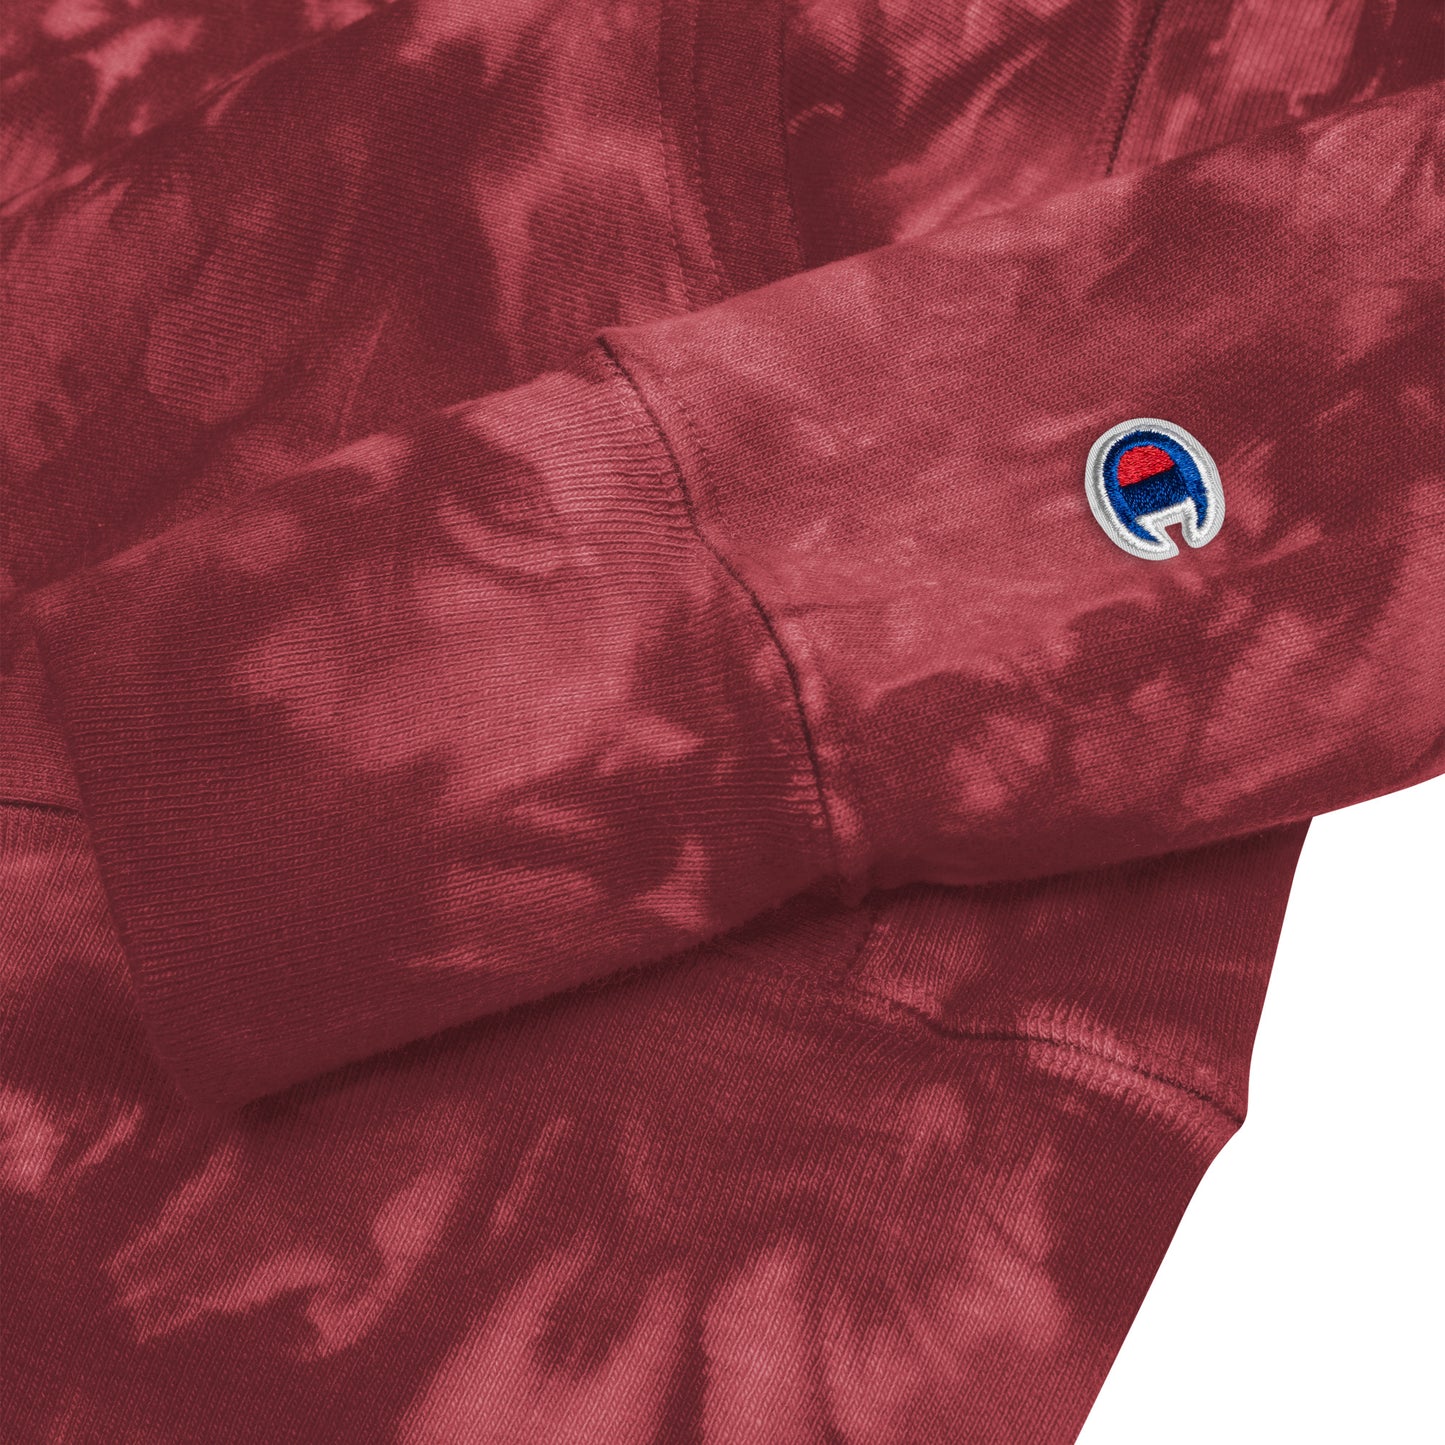 New York Apple Logo Embroidered Red Mulled Berry Champion Tie-dye Hoodie Sweatshirt Scattered Streetwear